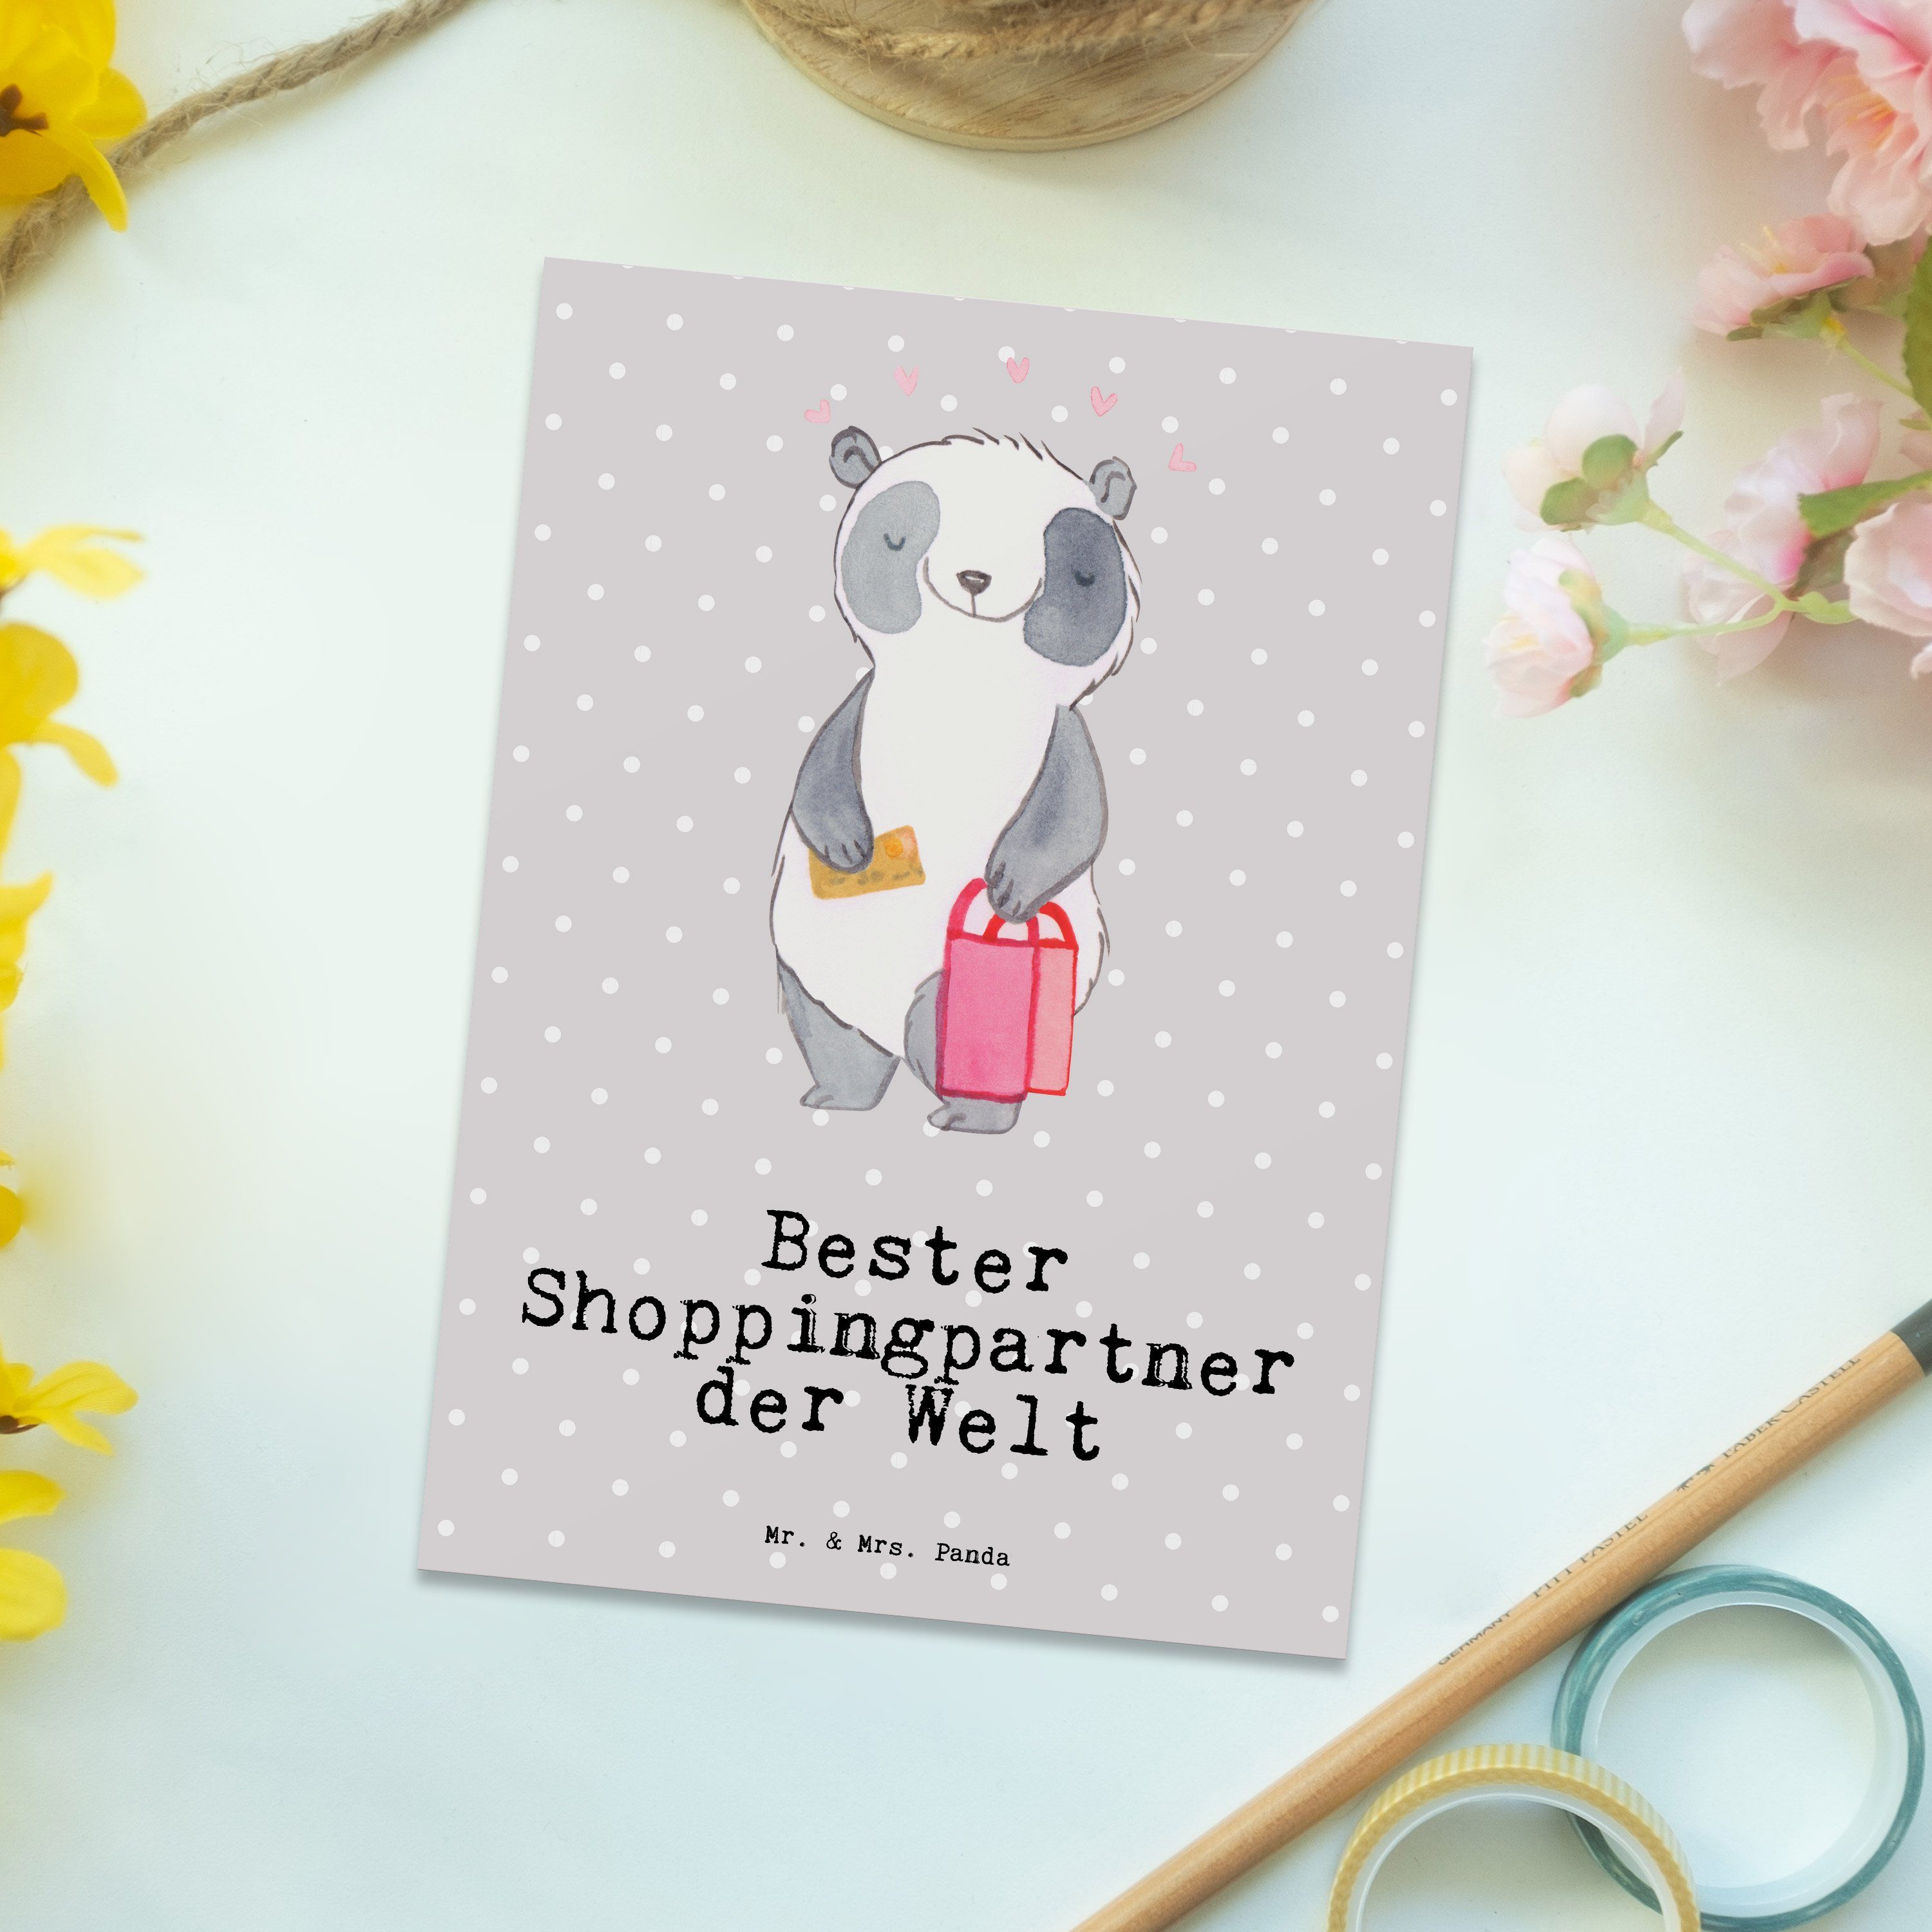 Pastell Grau Geschenk, - Panda Mr. - Shoppingpartner Welt der Mrs. Panda & Ansi Postkarte Bester